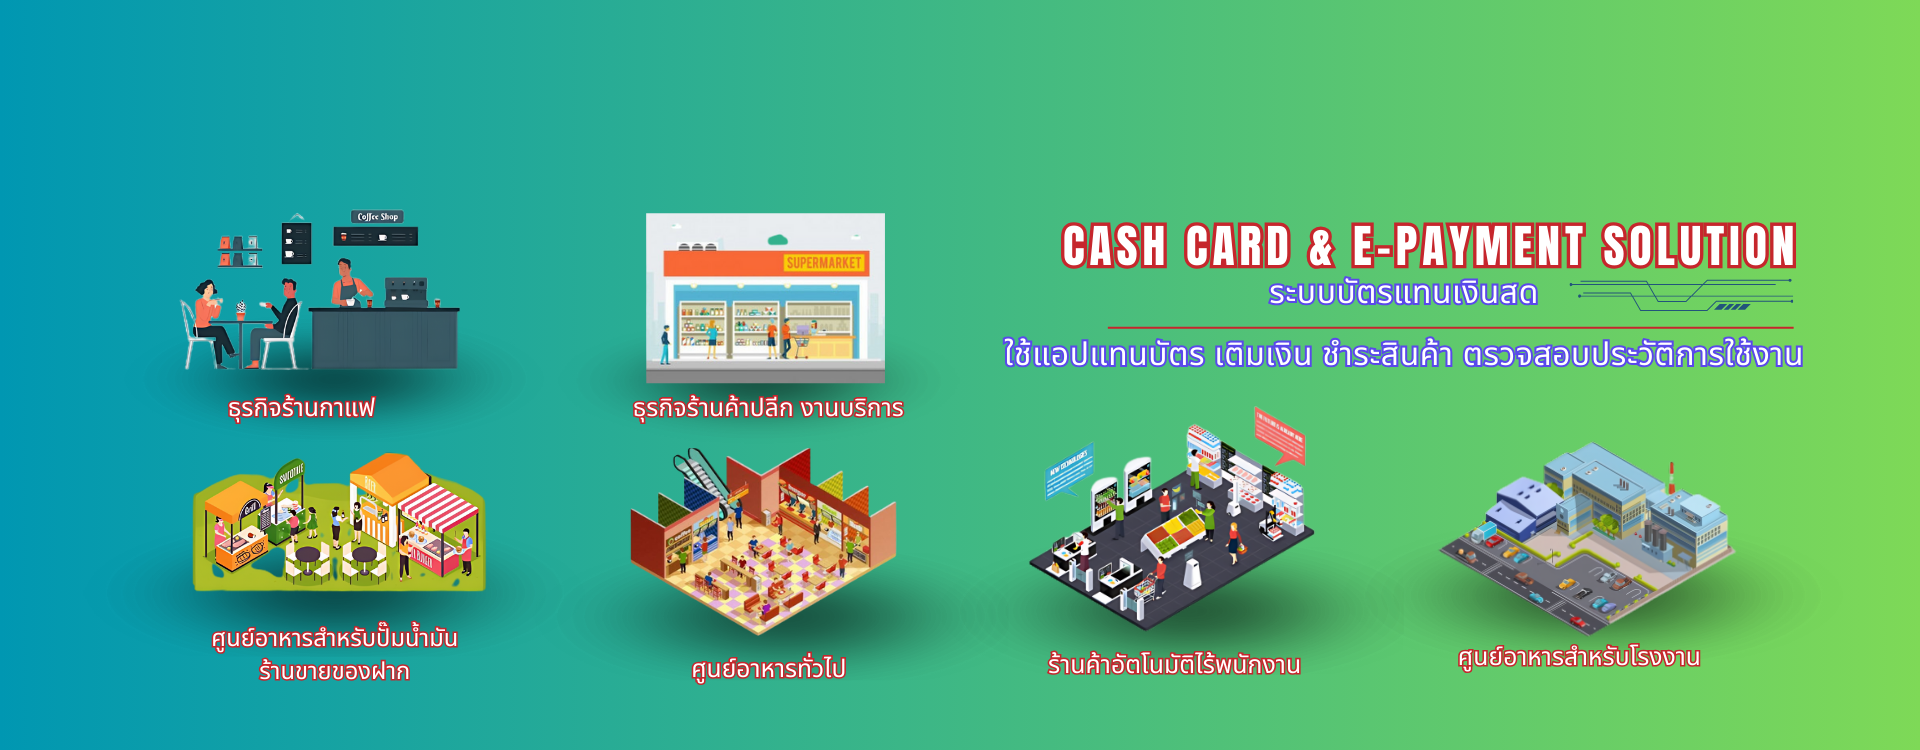 cash card E-payment solutions